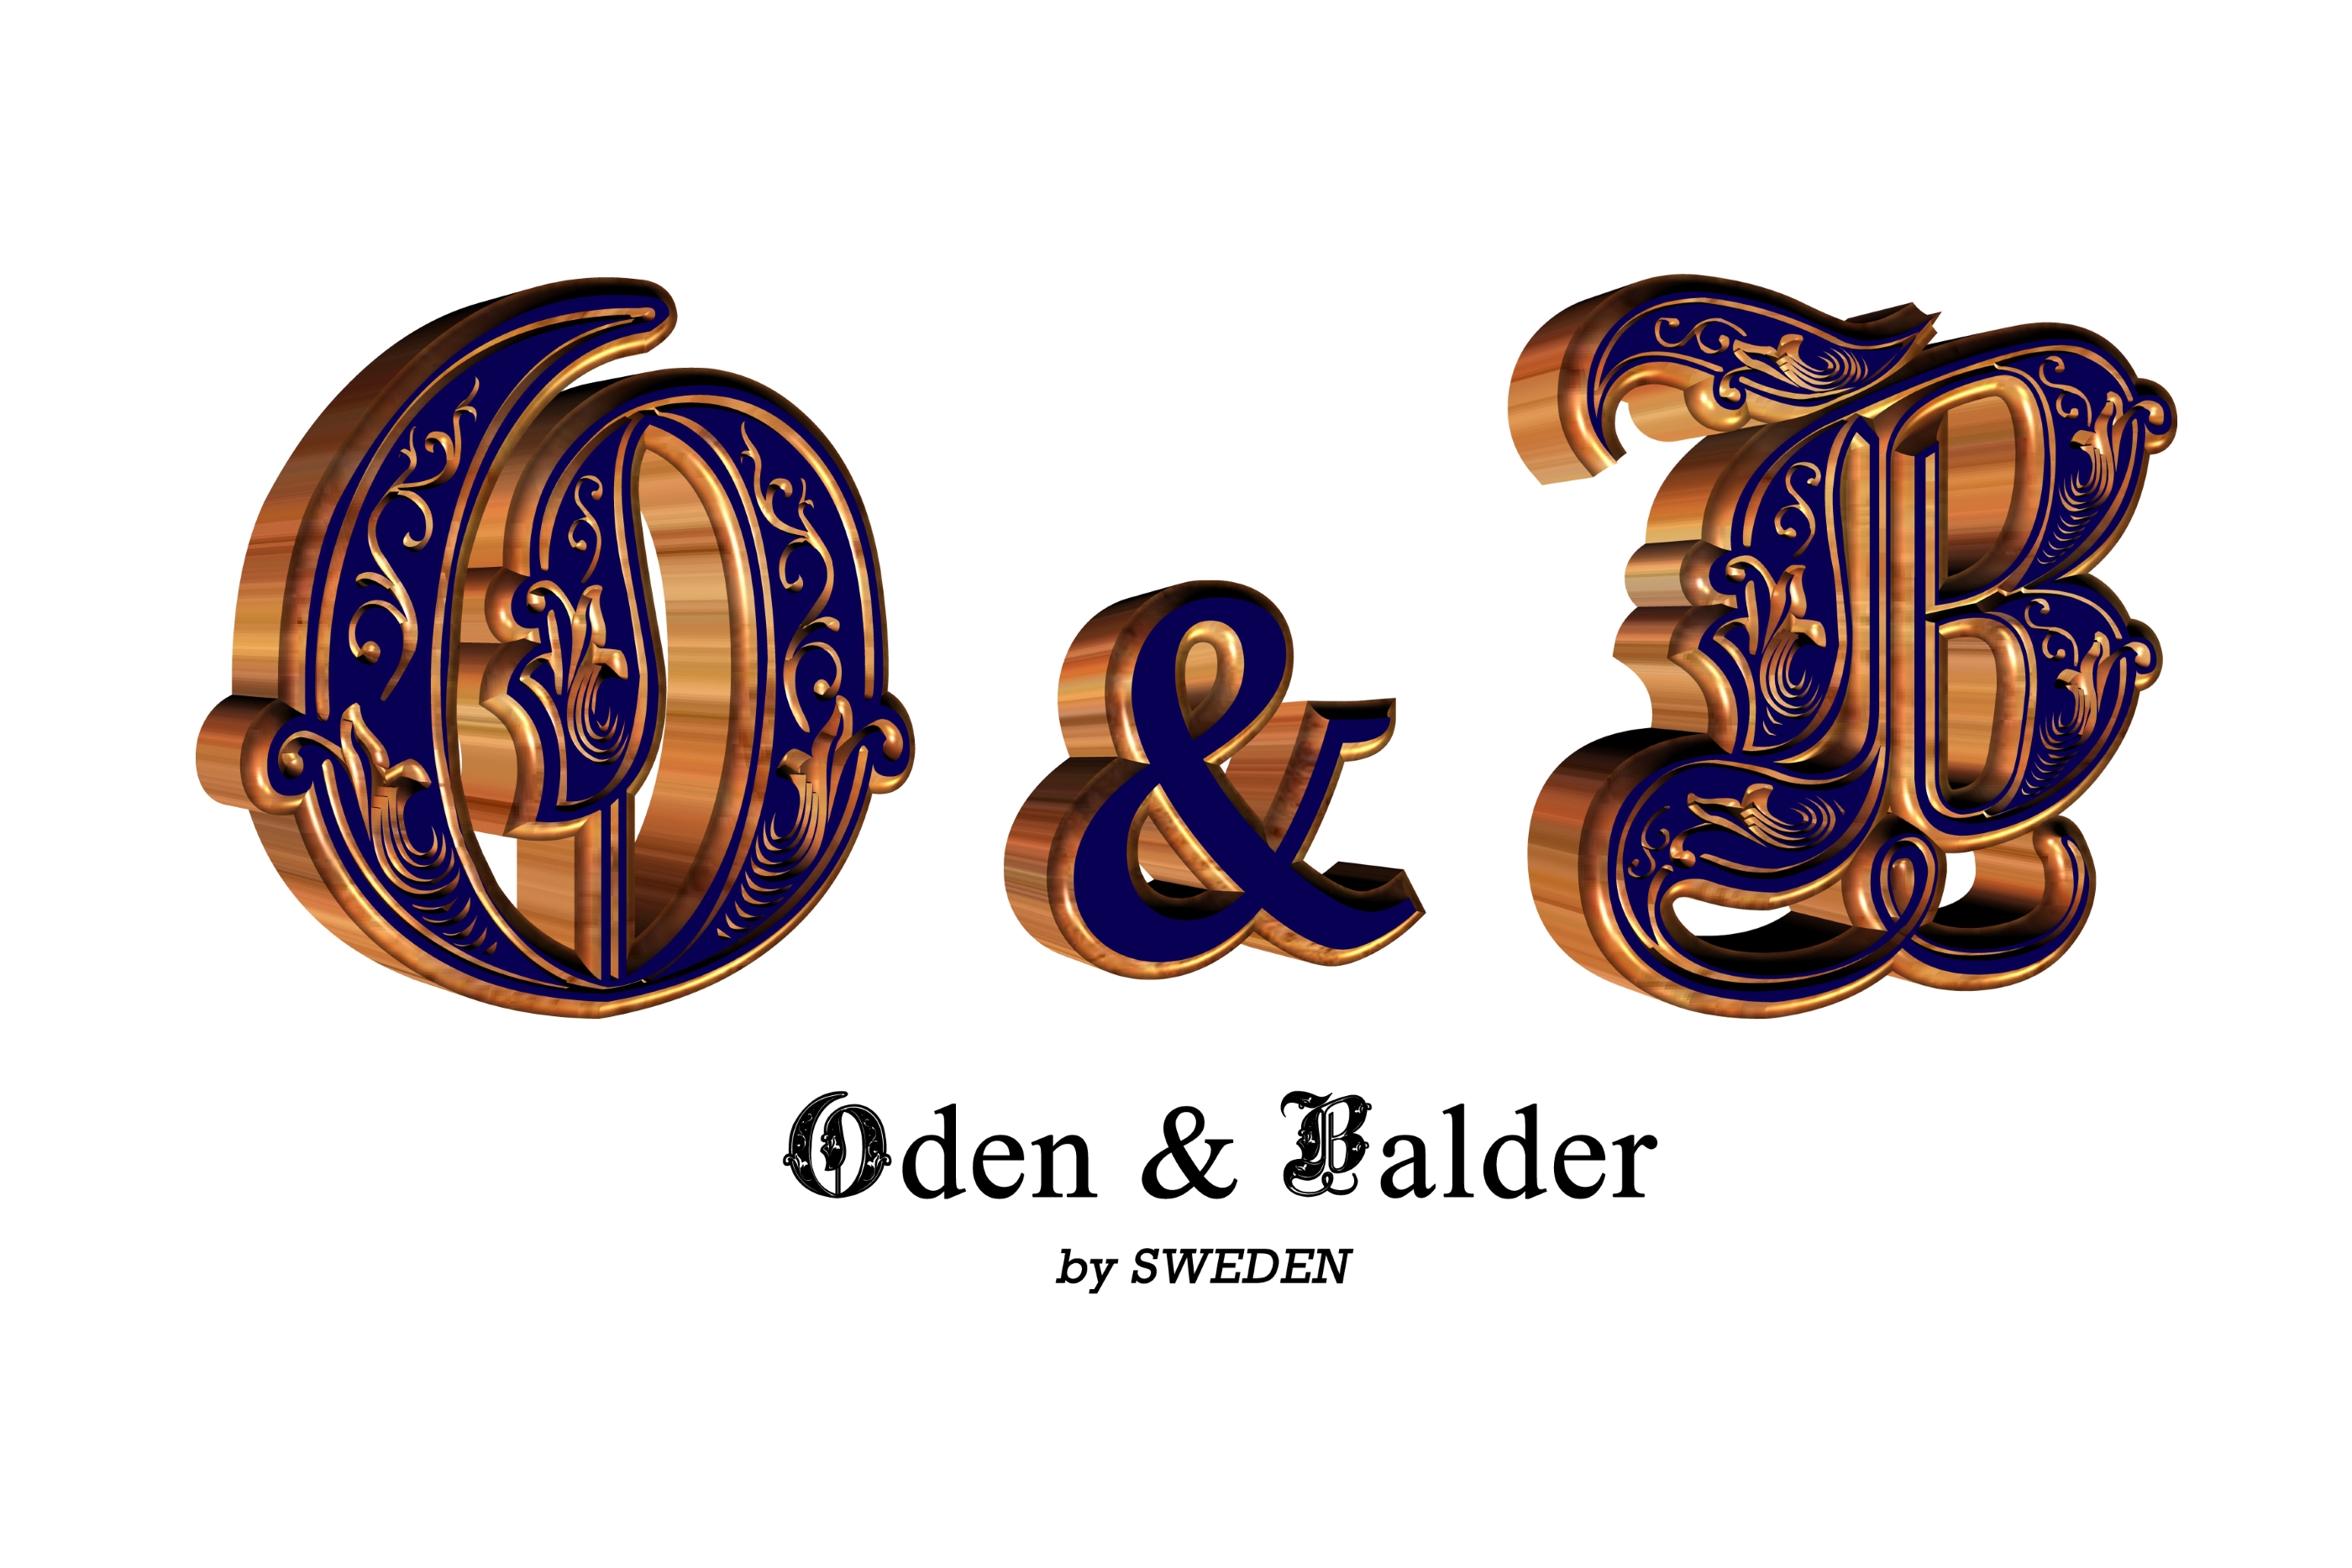 O&B Oden & Balder by SWEDEN